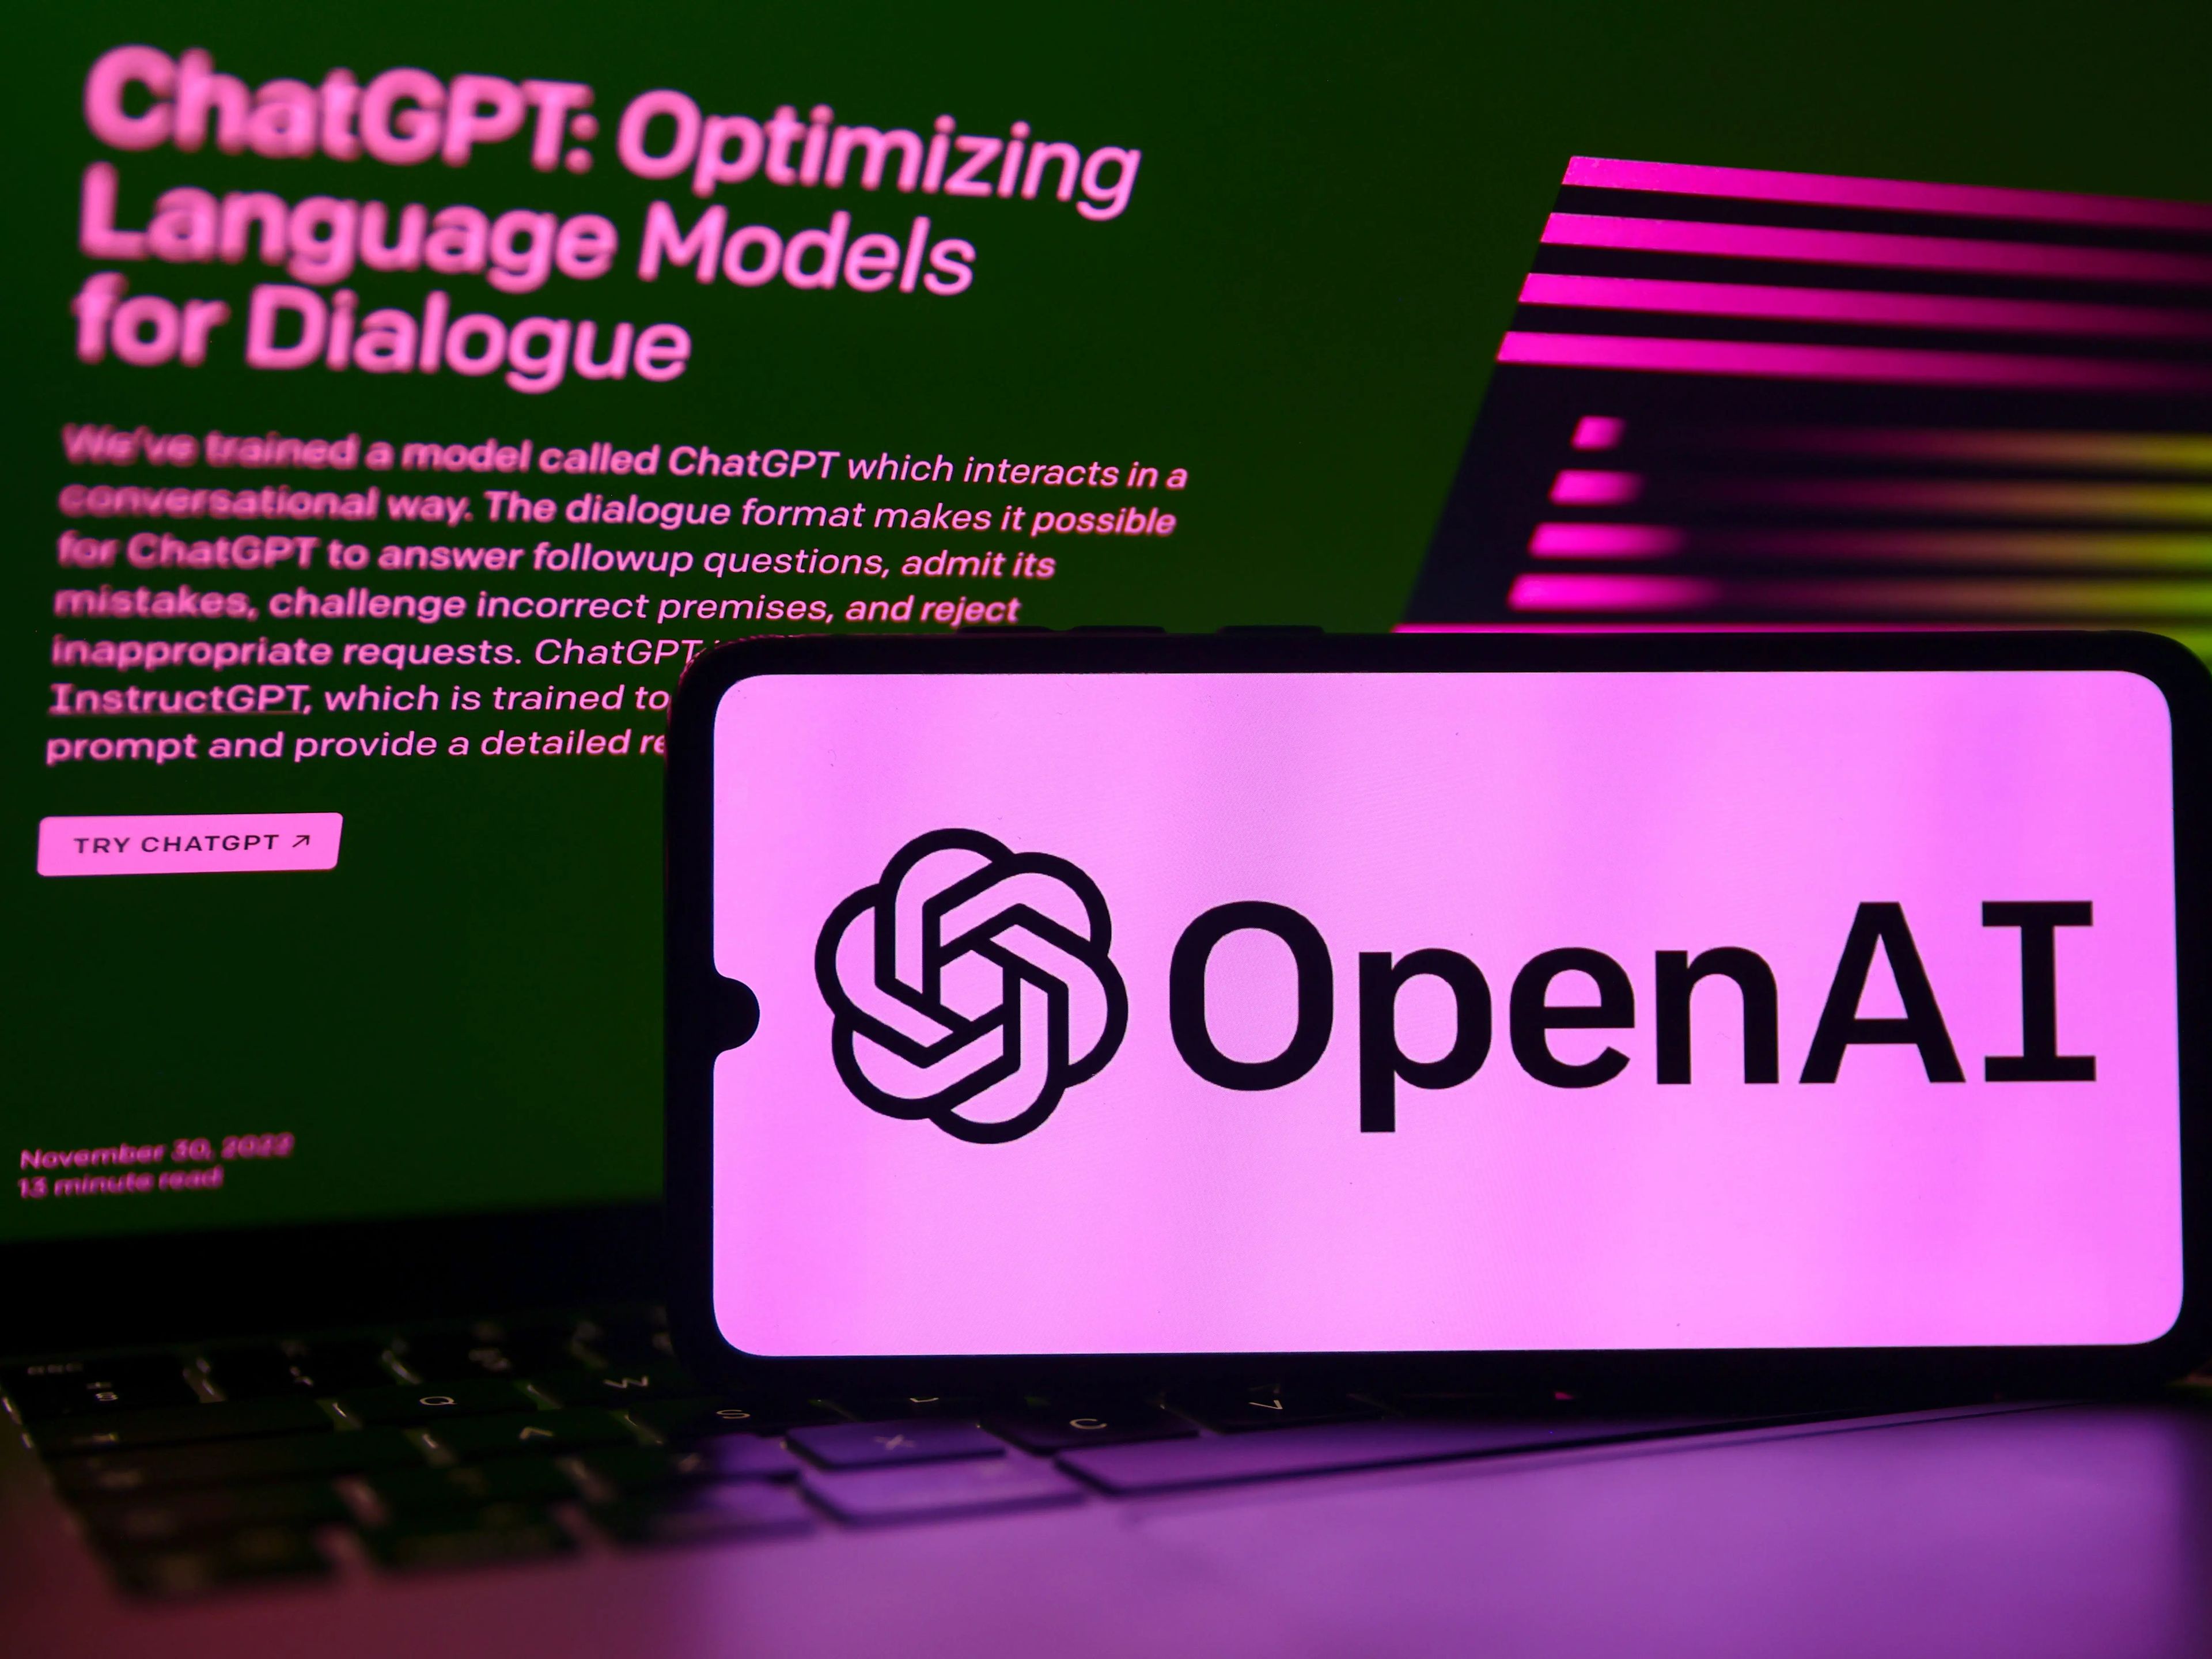 Logo de OpenAI, desarrolladora de ChatGPT, en la pantalla de un smartphone.